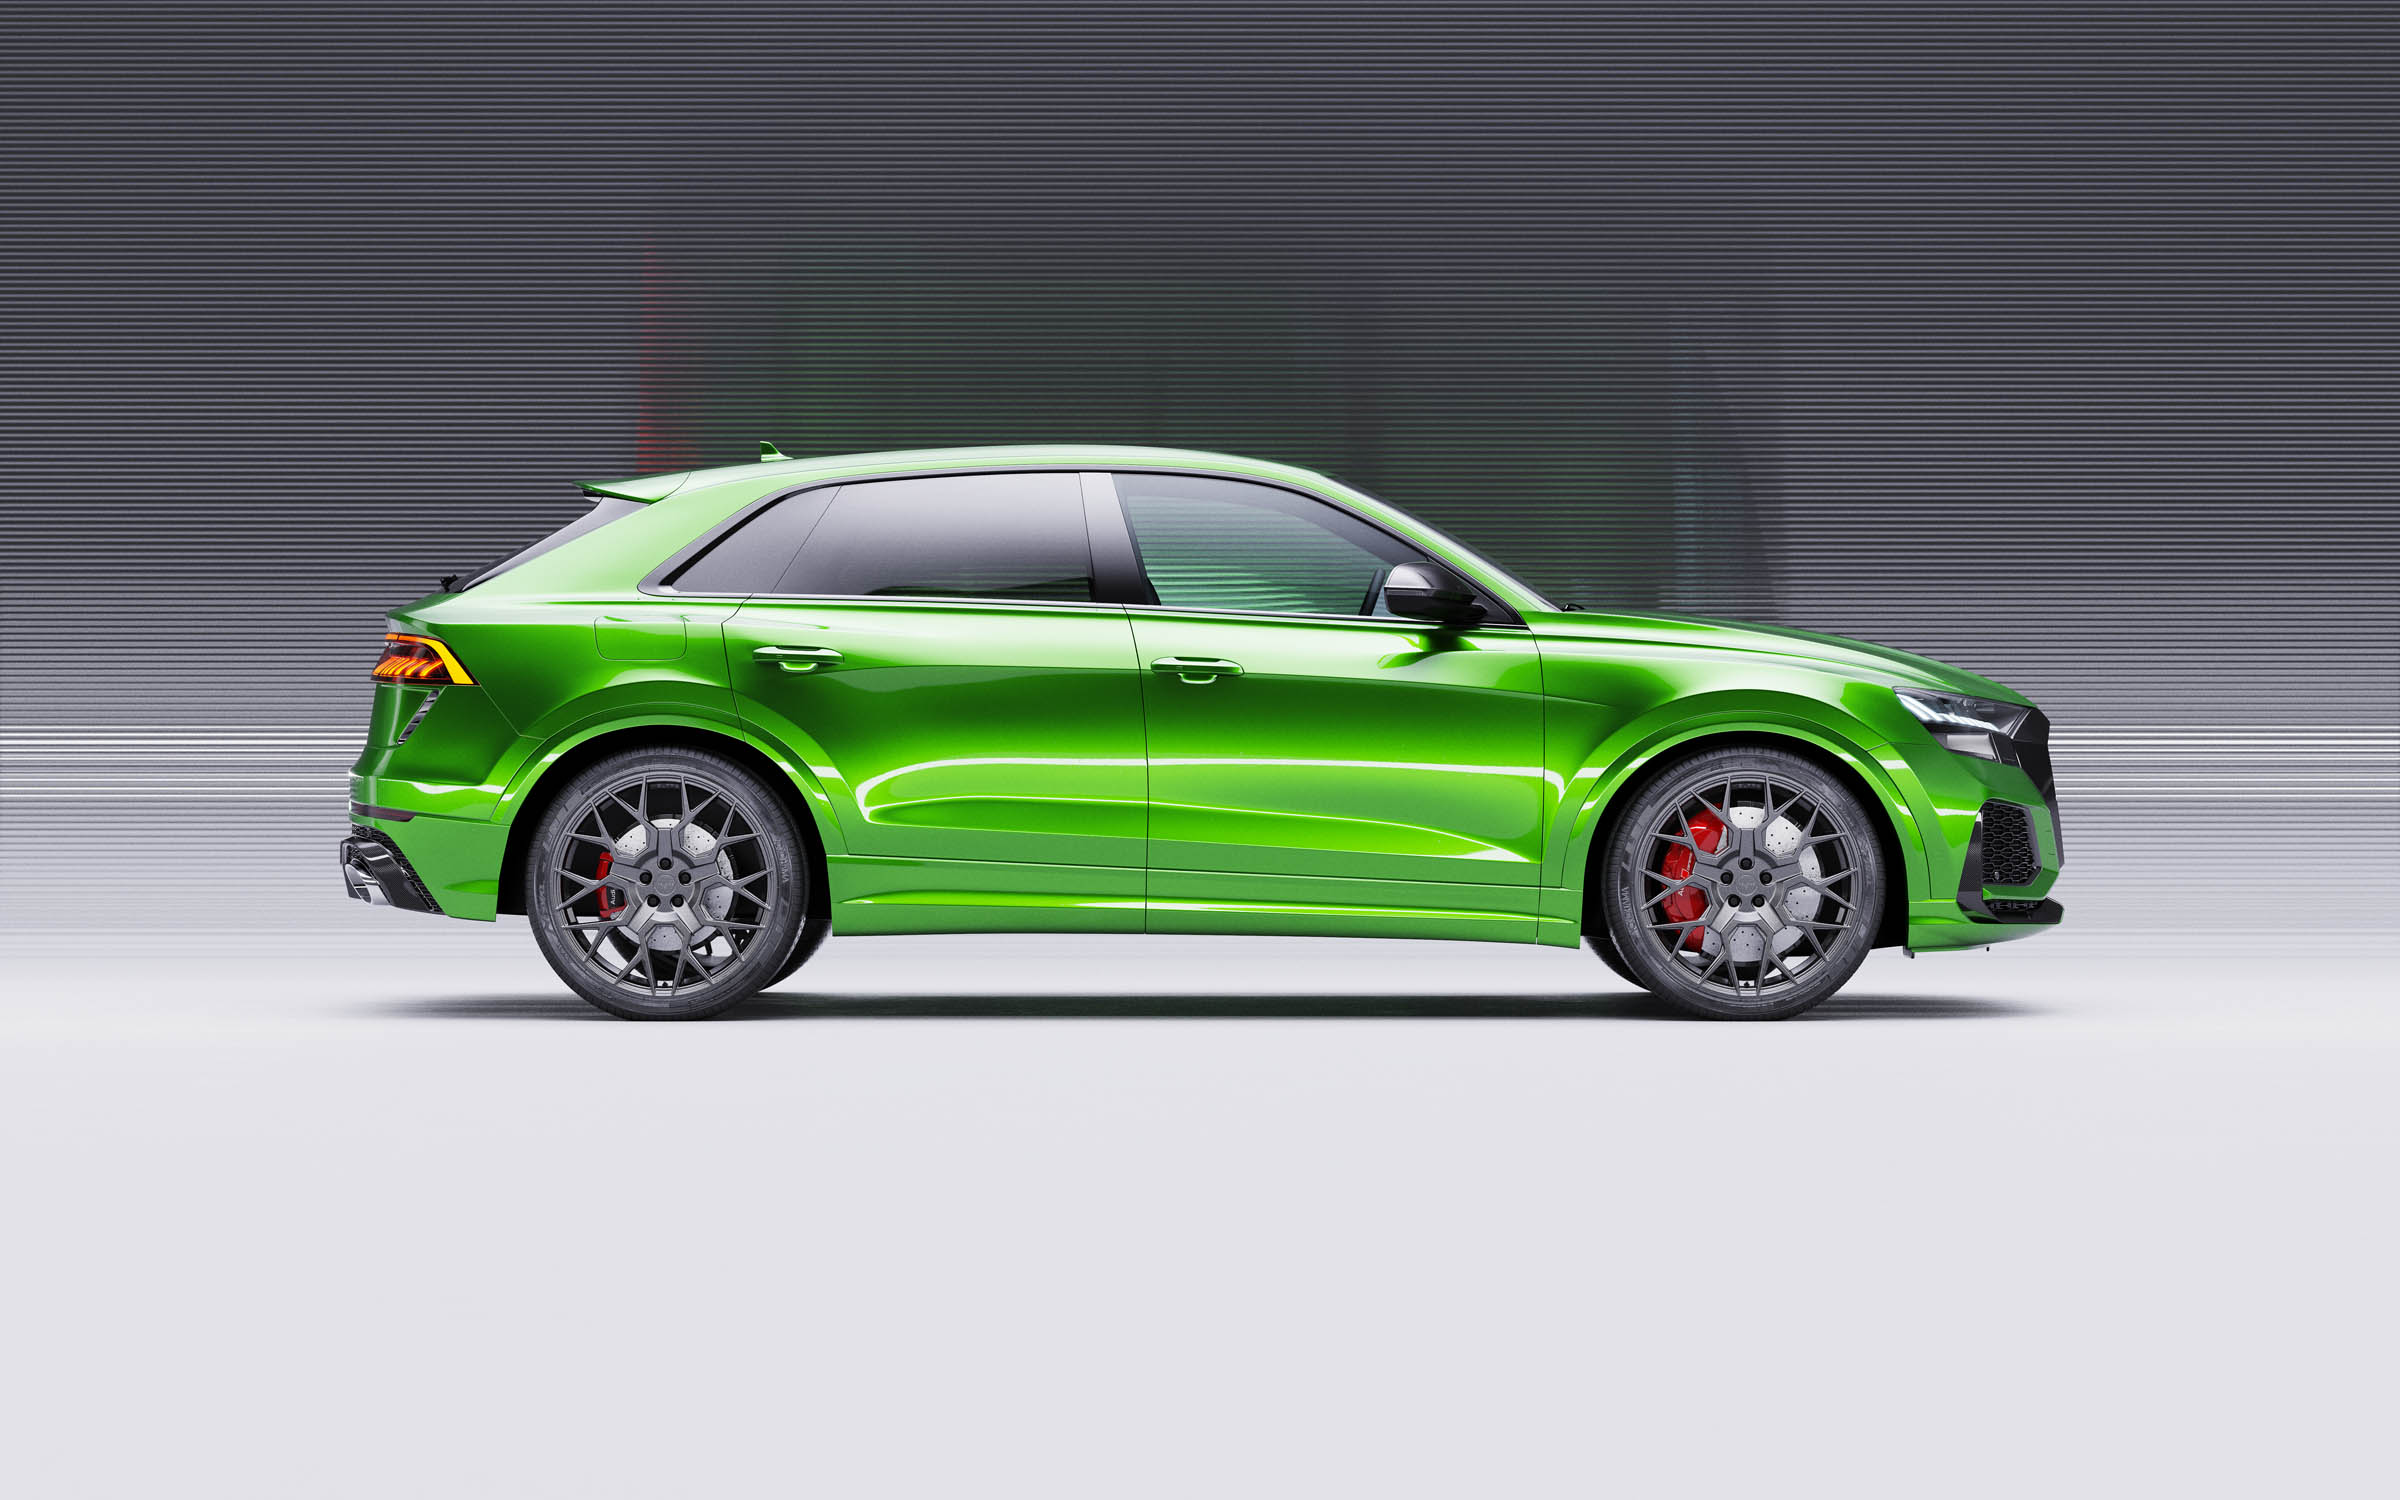 Audi Q8 RS 2020 Green Matt Graphite Velare VLR02 Wipdesigns 3D CGI Visualisation 18